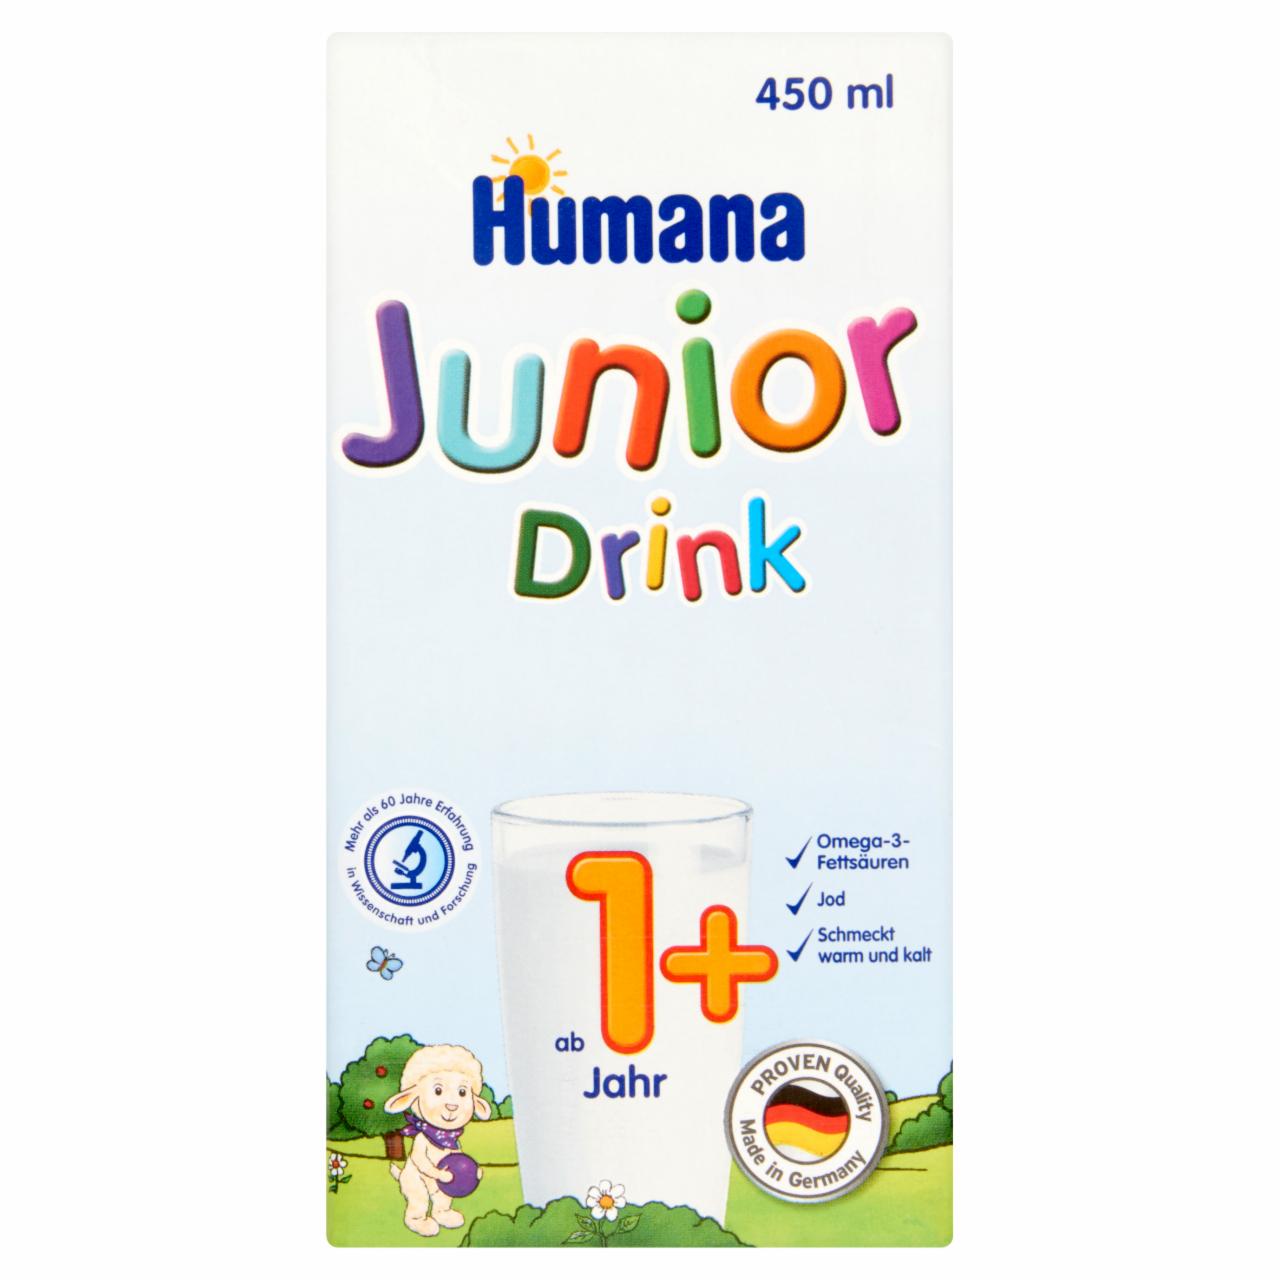 Képek - Humana Junior Drink vanília ízű tejital 12 hónapos kortól 450 ml